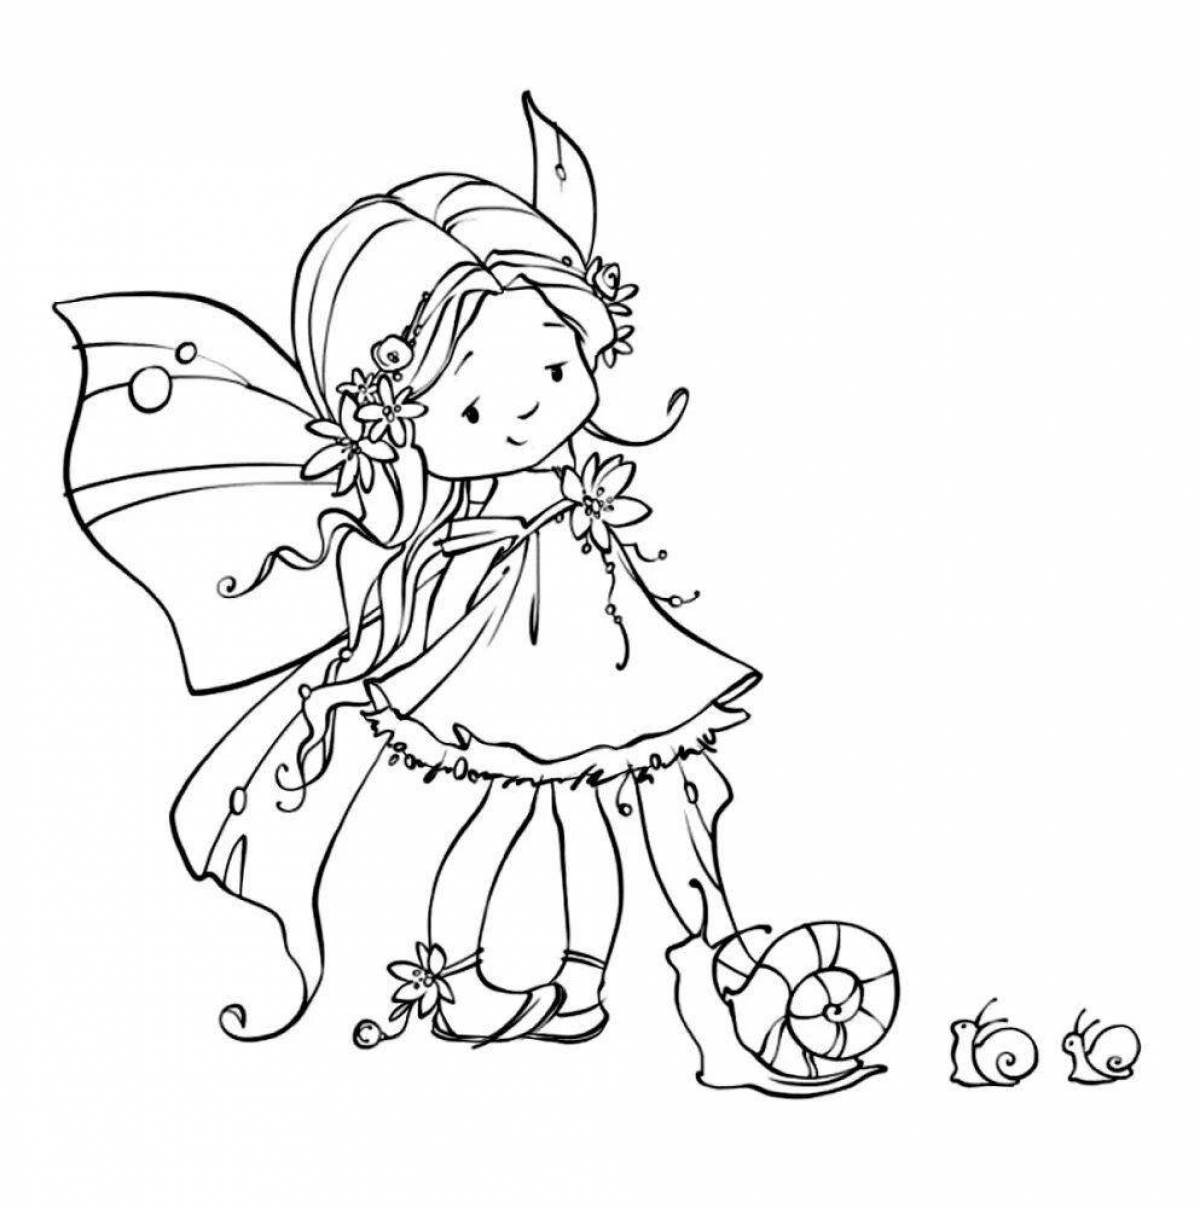 Coloring page joyful little fairy